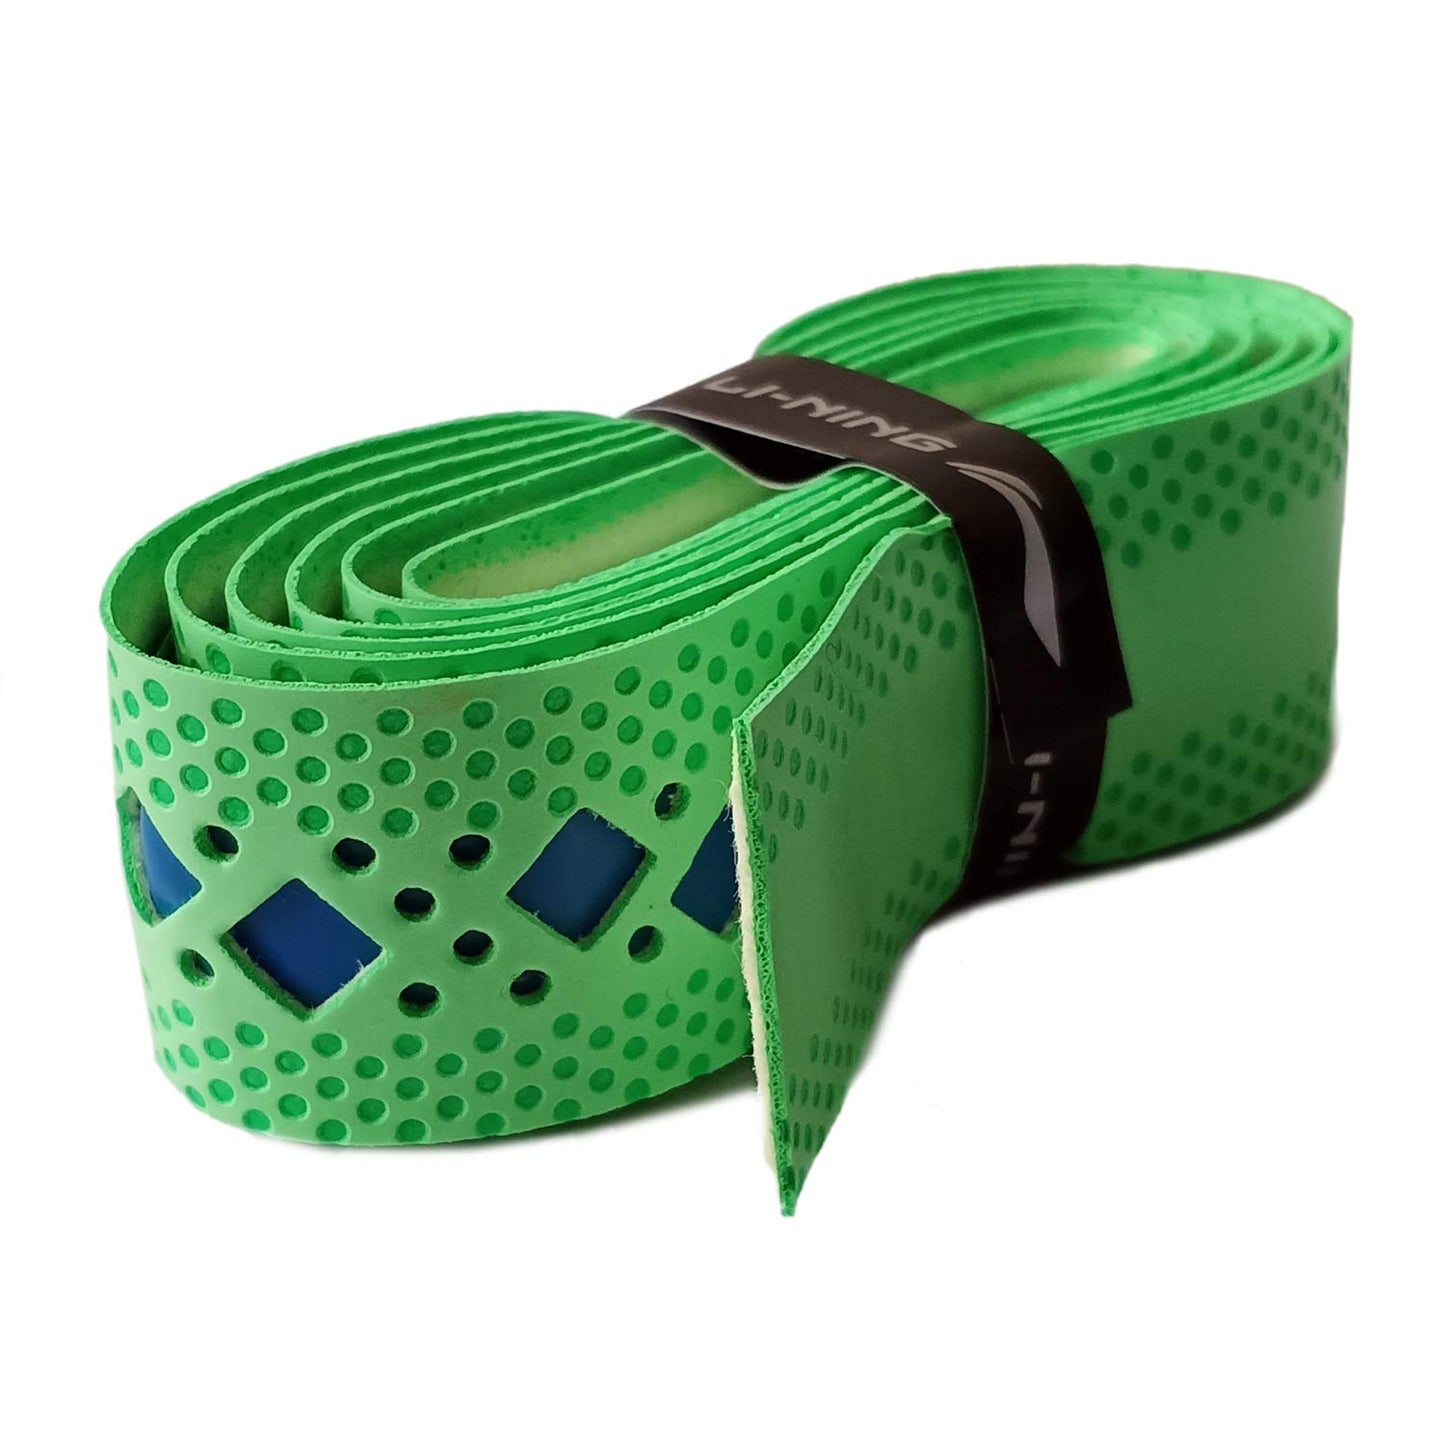 Li-Ning GP35 Badminton Dual Color Grip (Pack of3) - Green - Best Price online Prokicksports.com